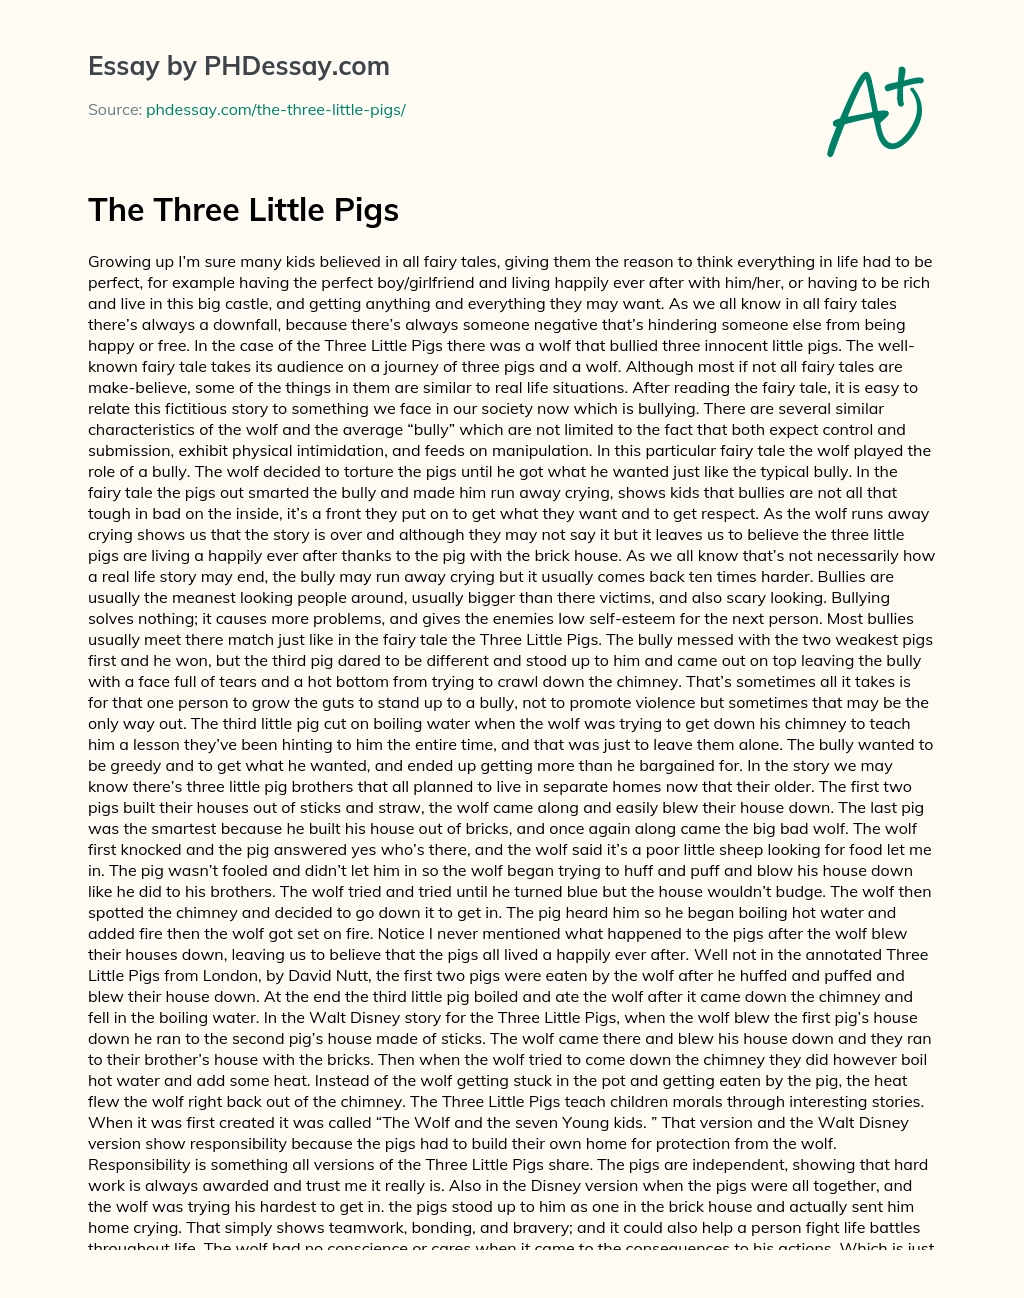 The Three Little Pigs essay